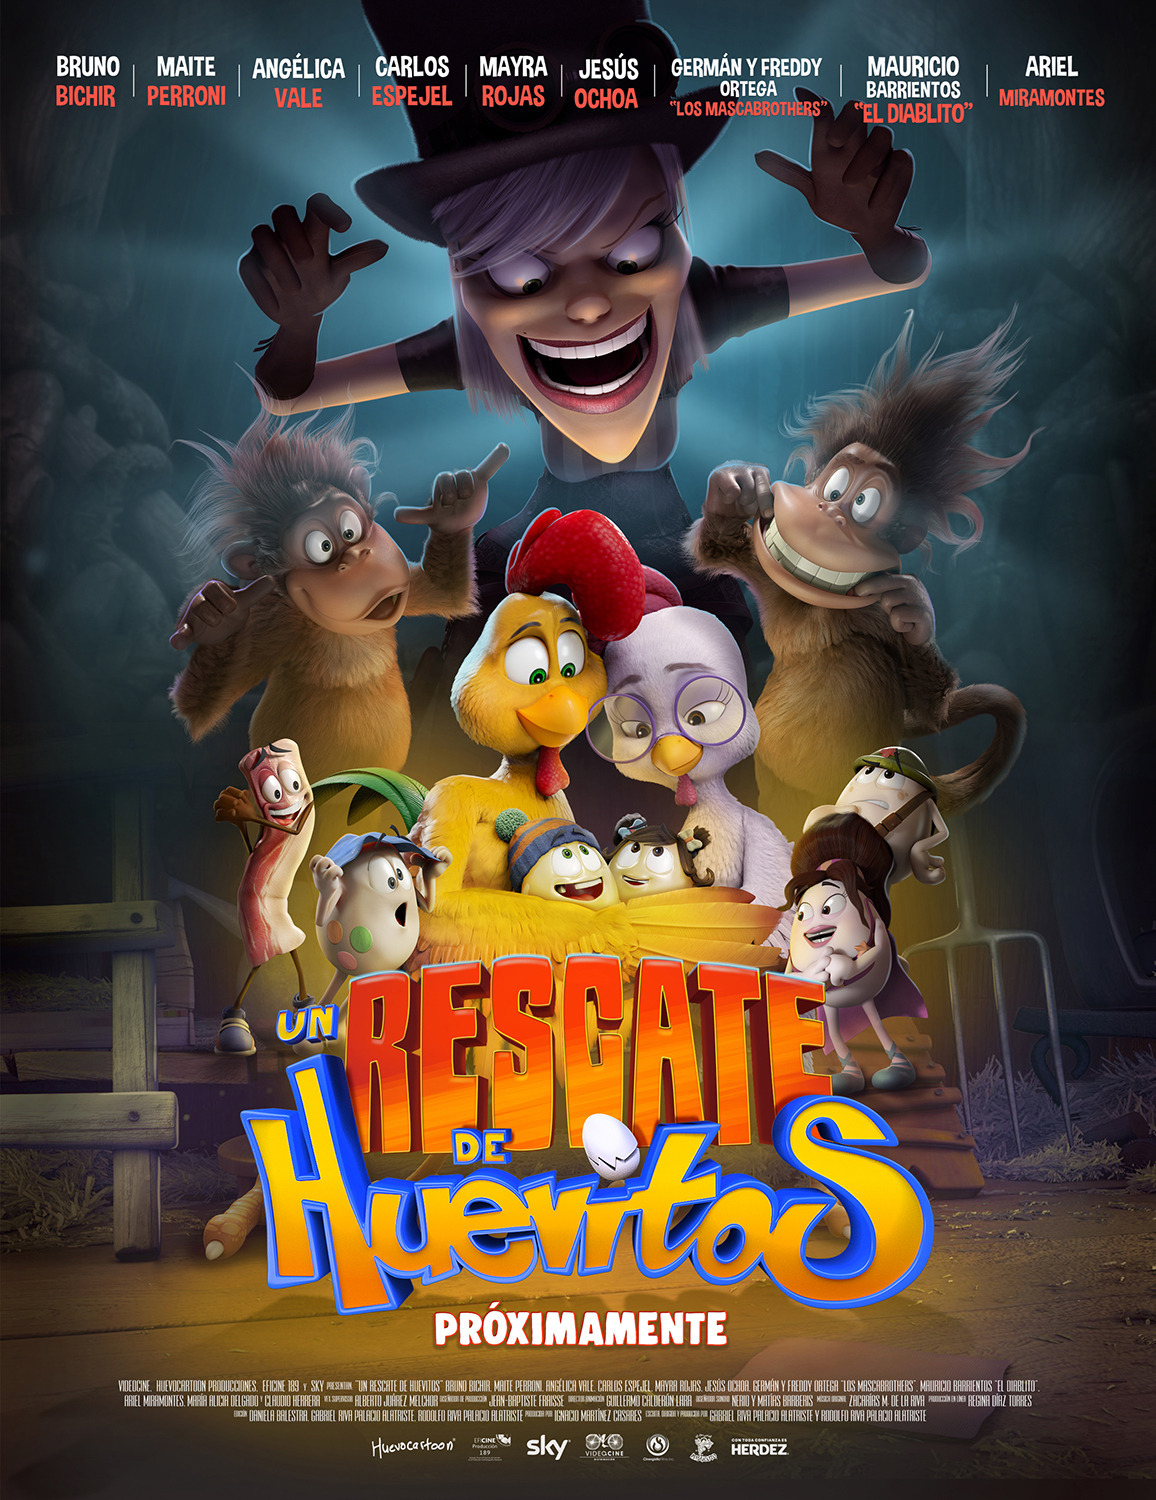 Extra Large Movie Poster Image for Un rescate de huevitos 